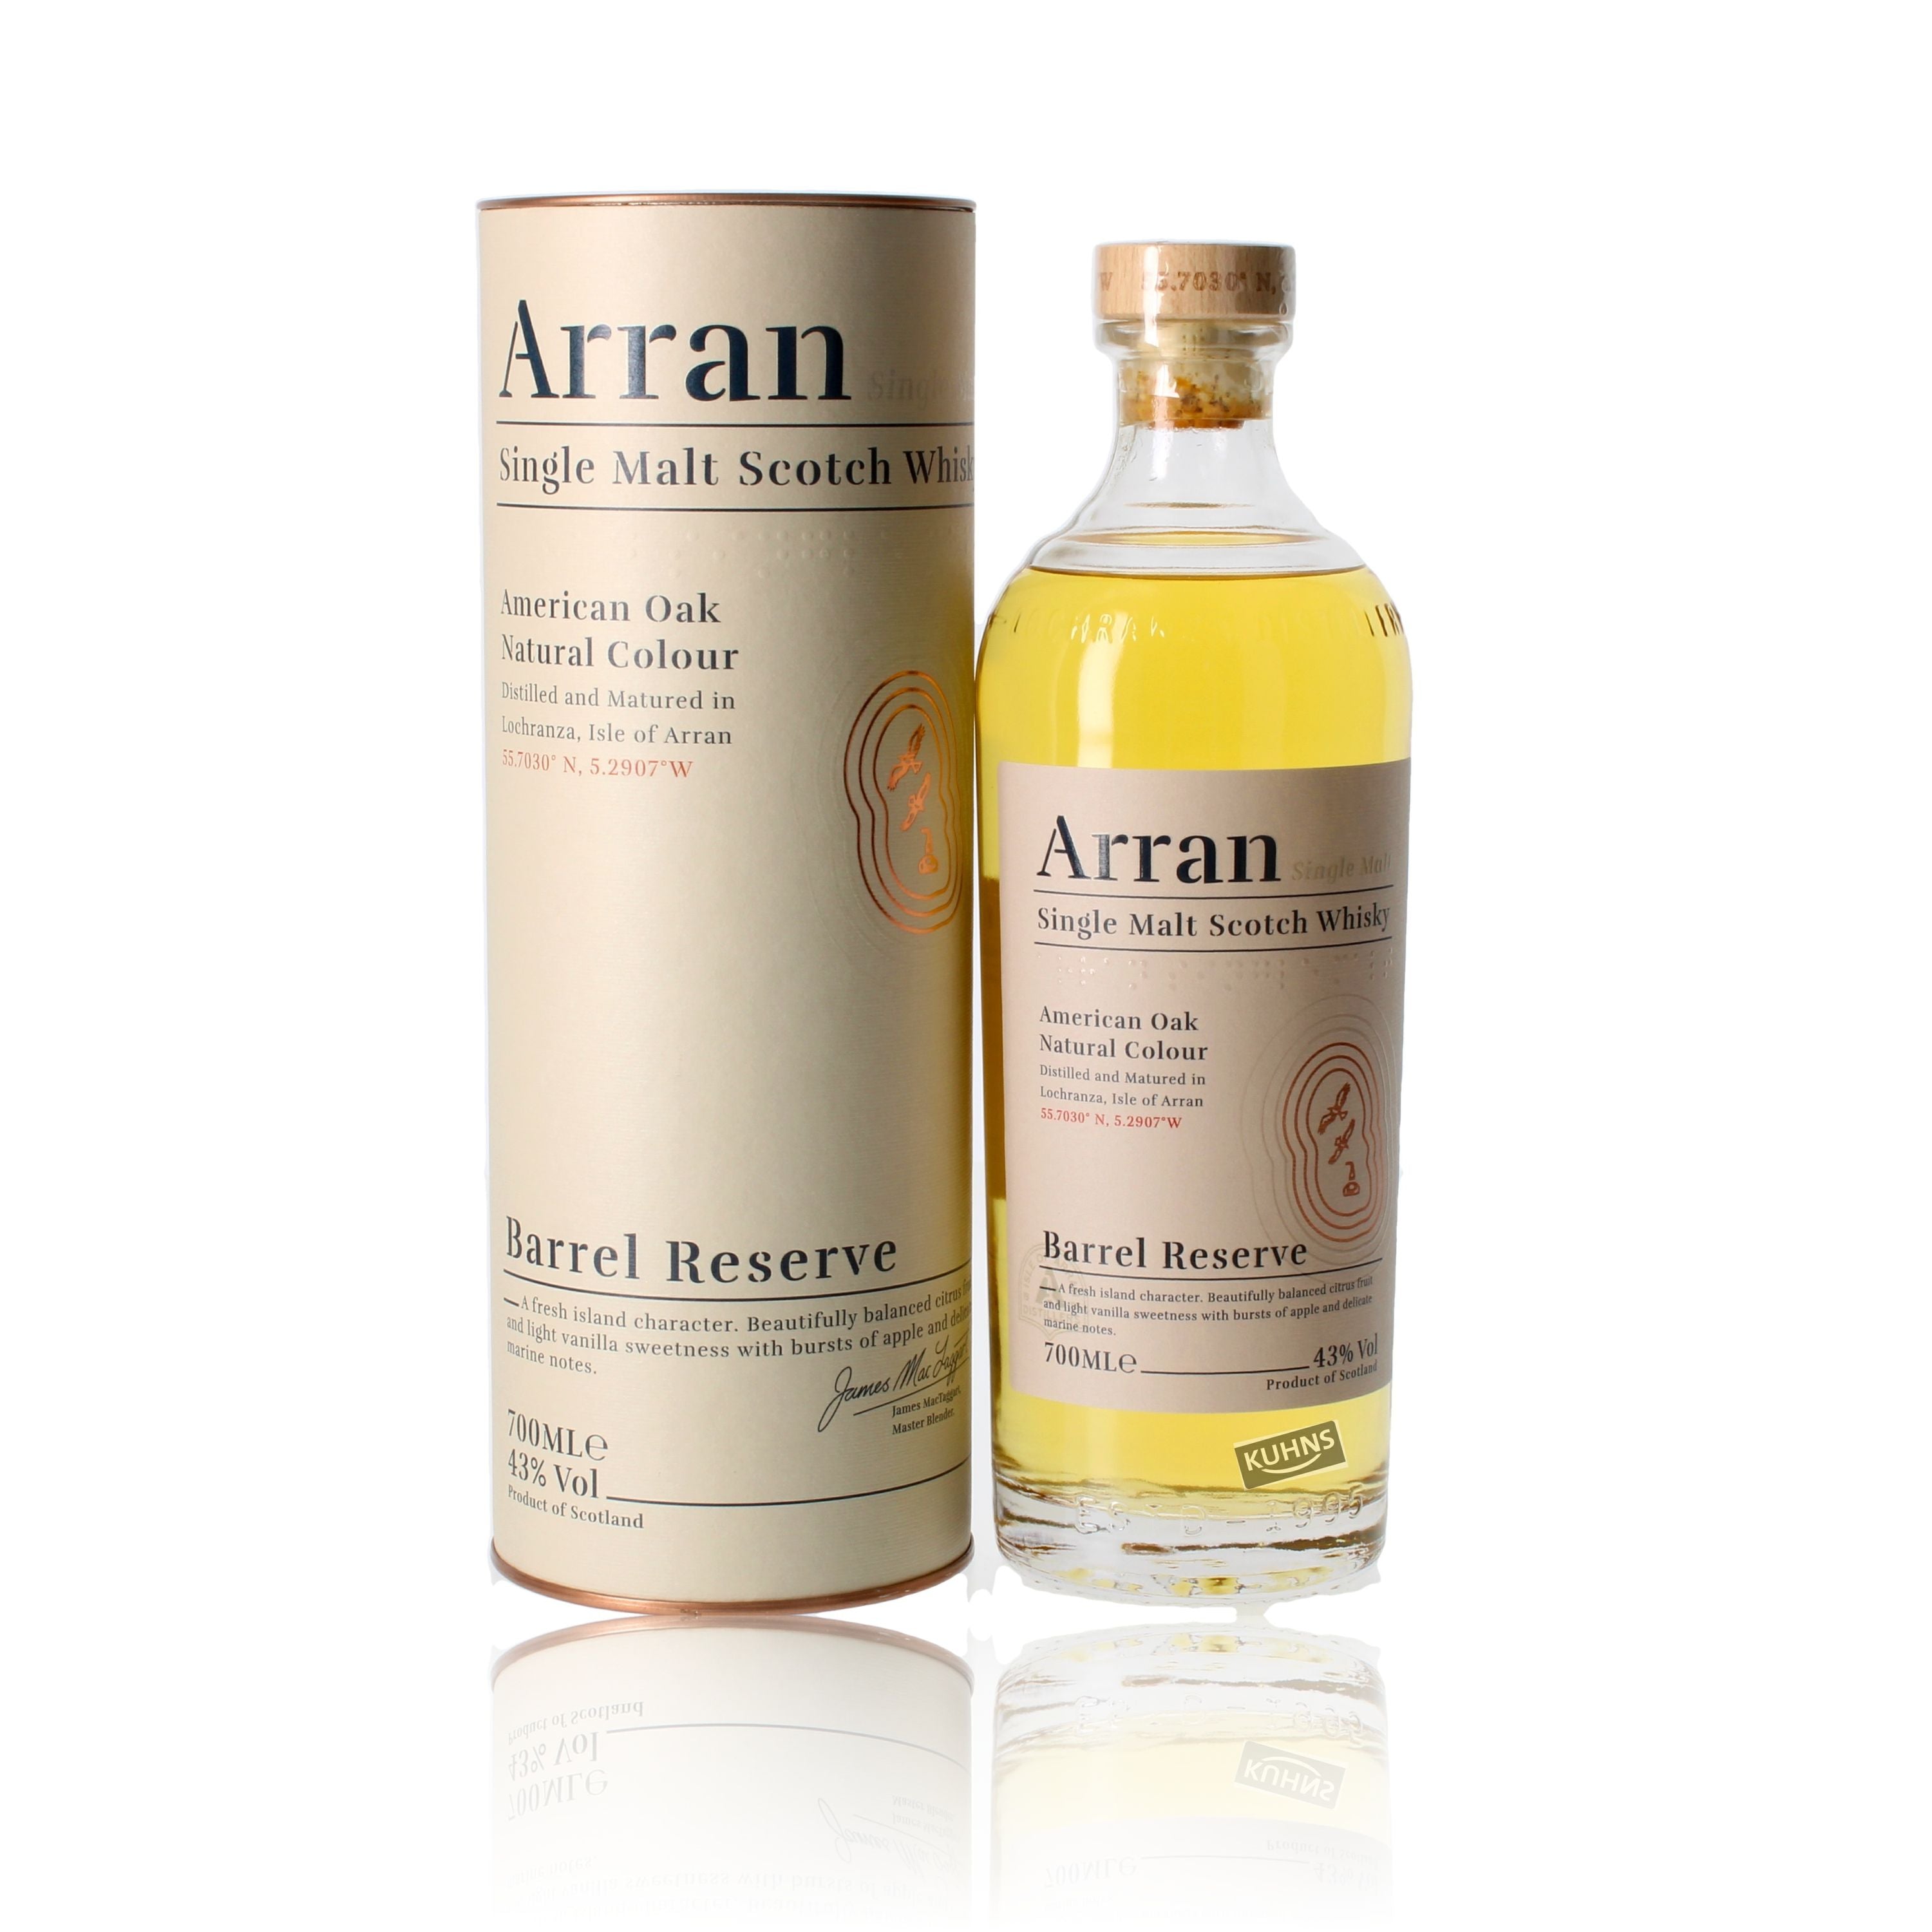 Arran Barrel Reserve Single Malt Scotch Whisky 0,7l, alk. 43 tilavuusprosenttia.